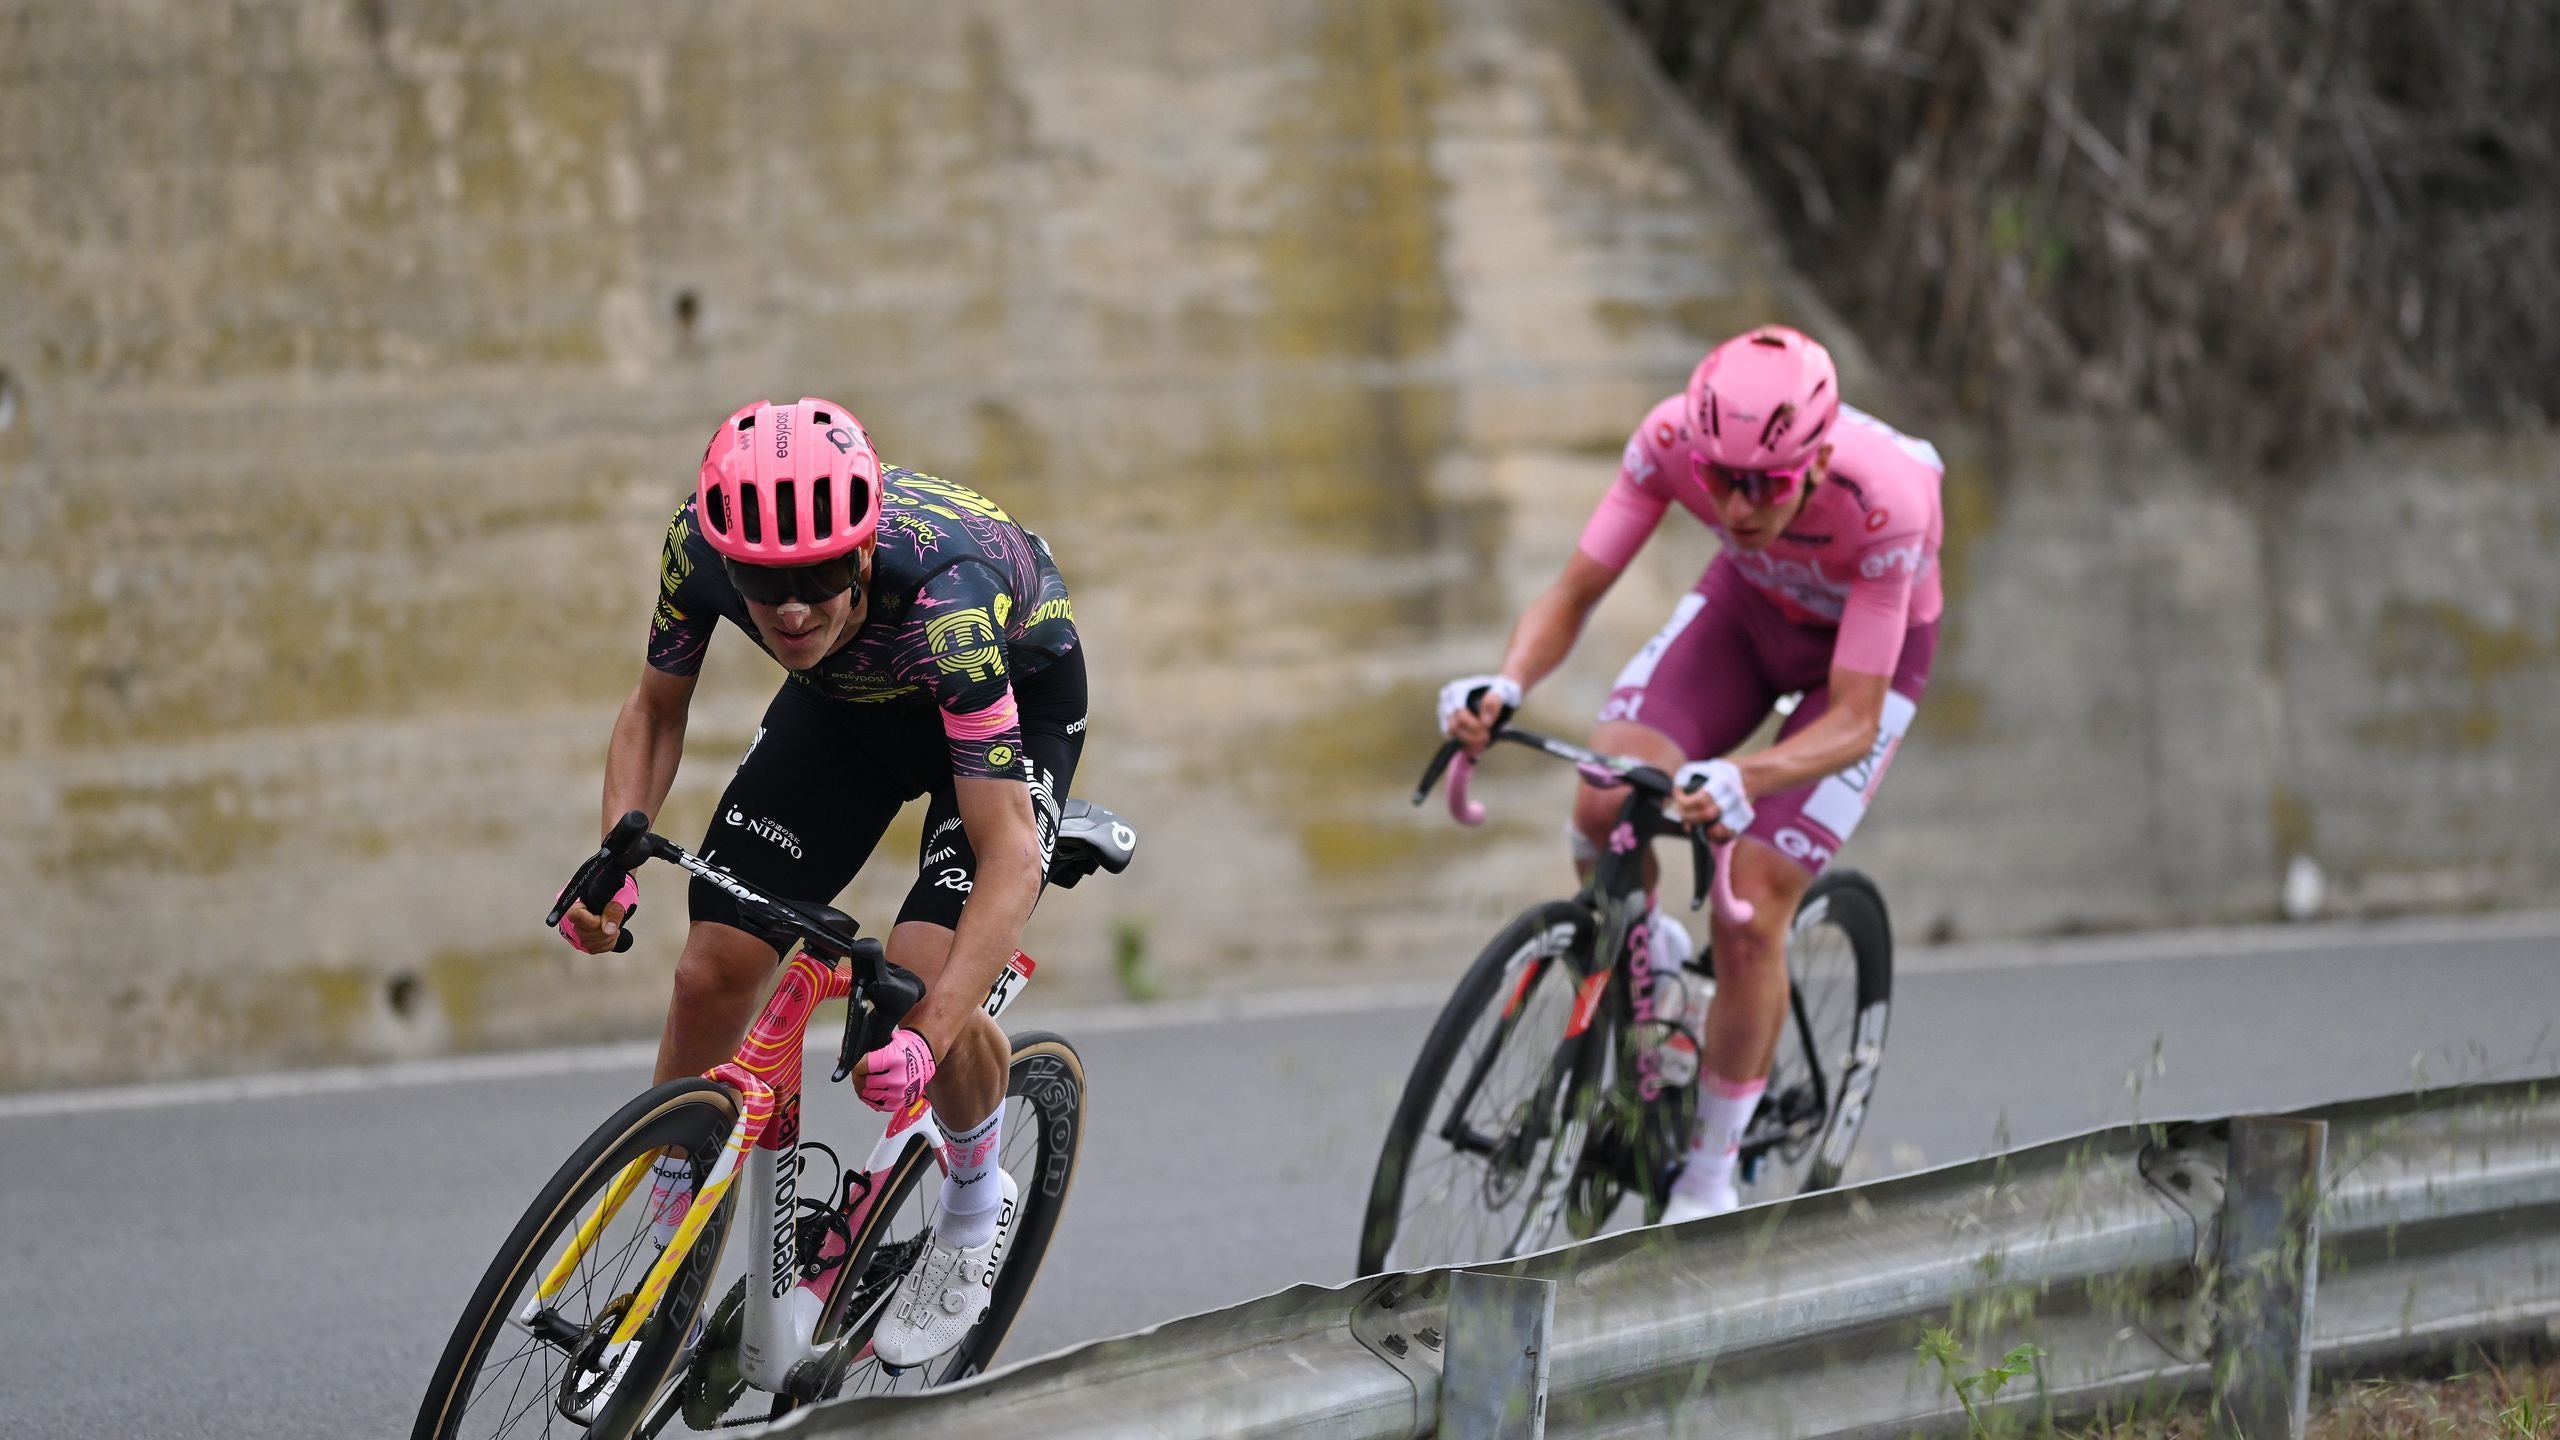 Pogačar Dominates Giro d’Italia and Aims for Third Tour de France Victory